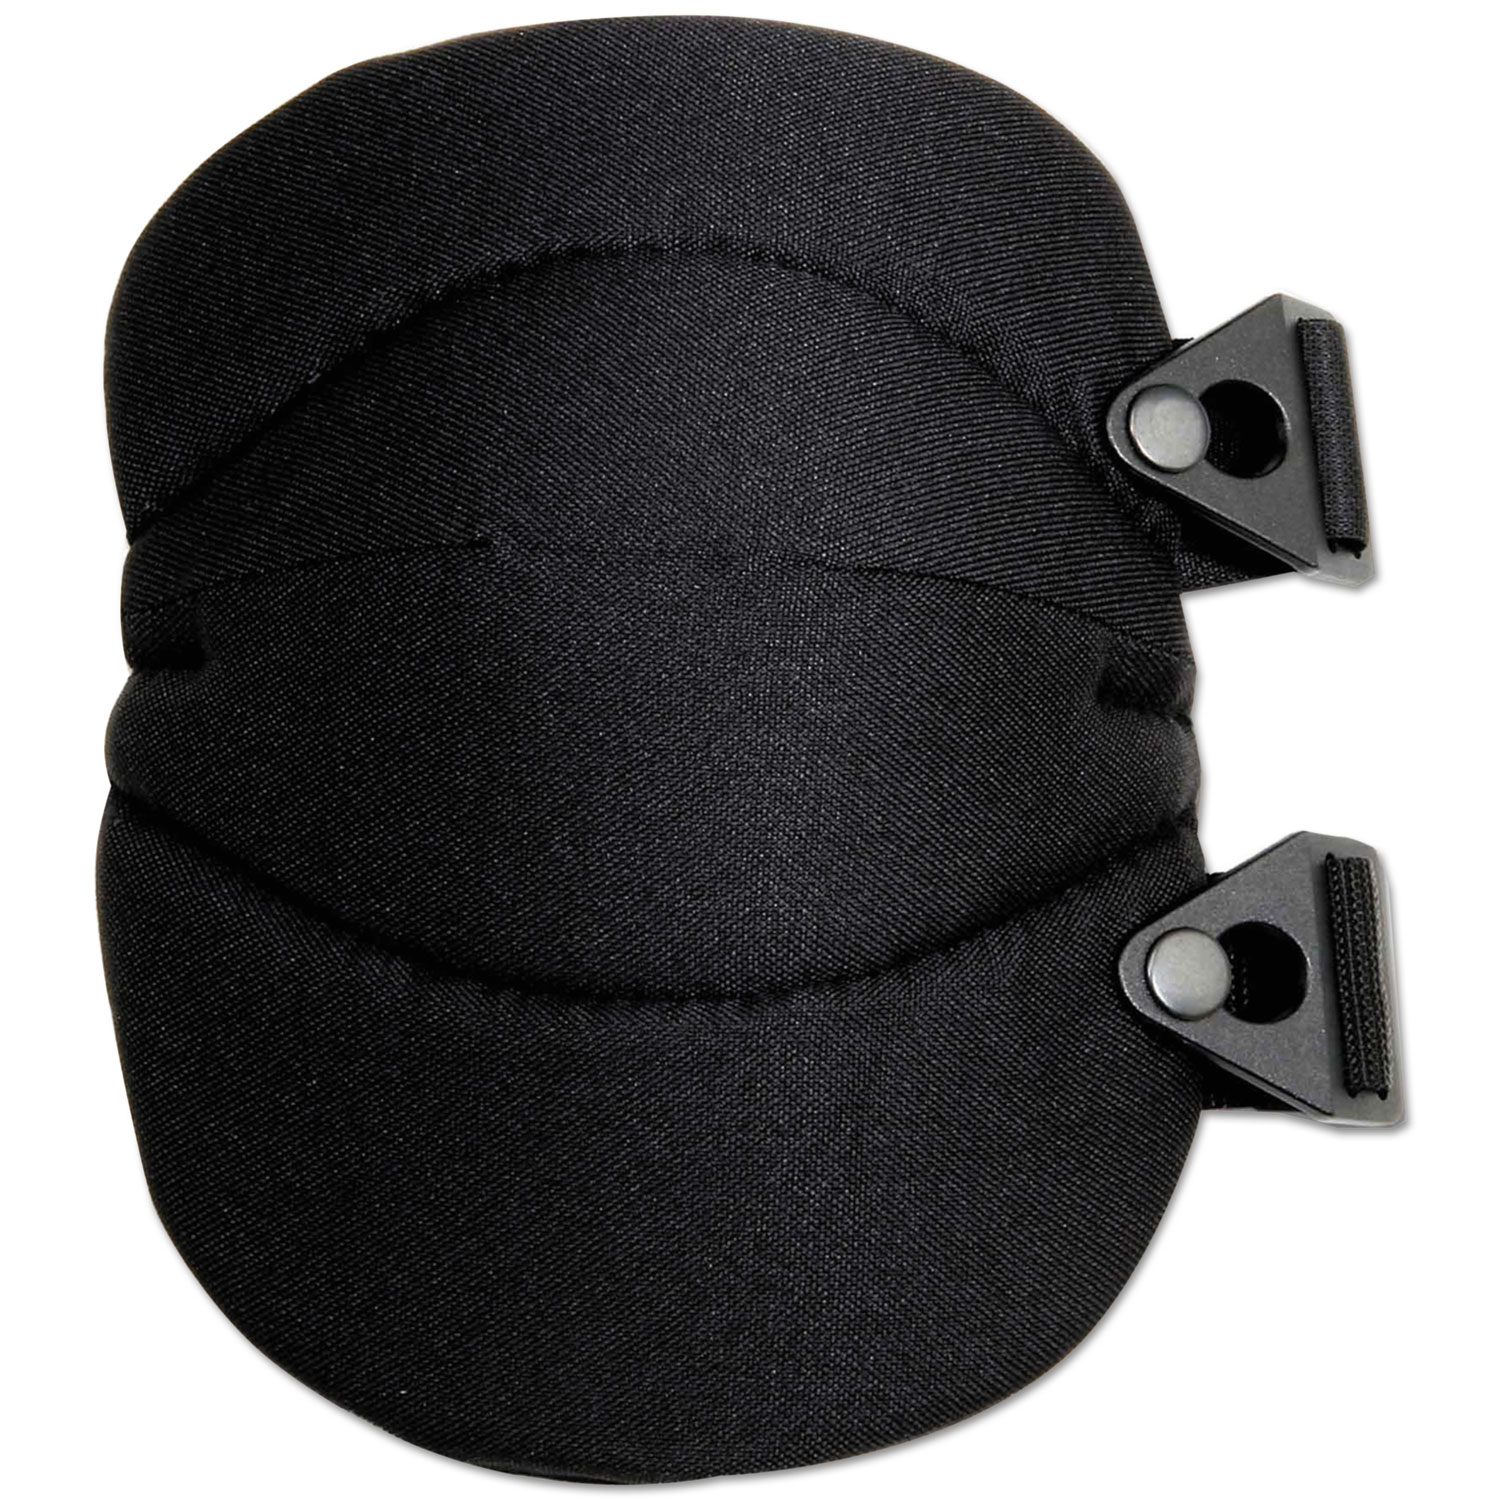  ergodyne 18230 ProFlex 230 Wide Soft Cap Knee Pad, One Size Fits Most, Black (EGO18230) 